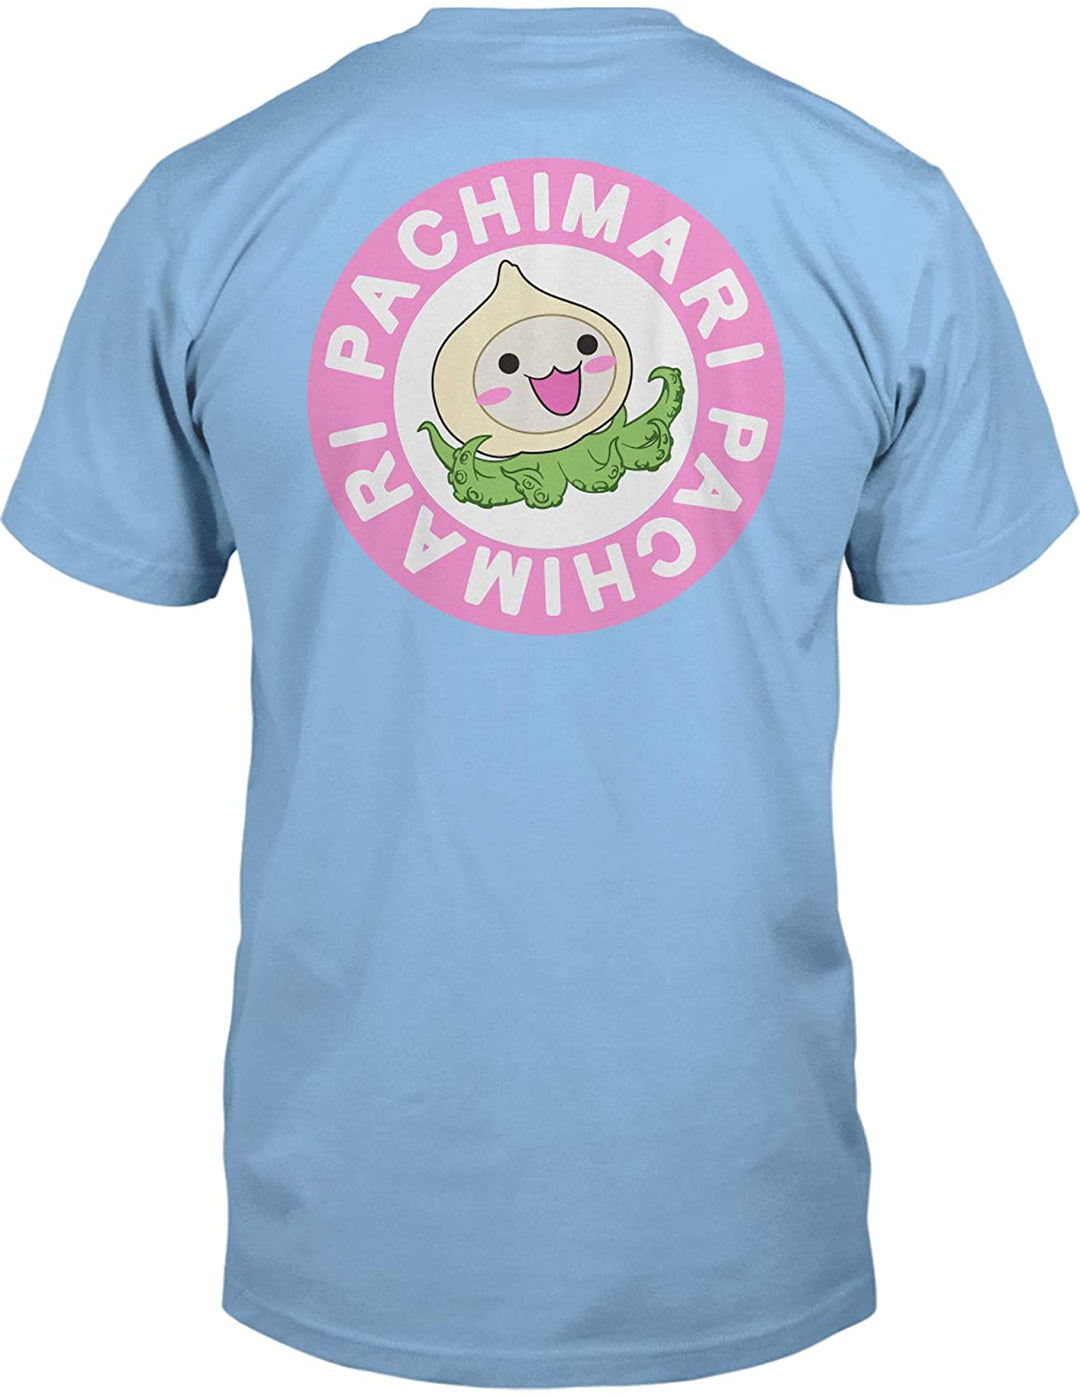 Overwatch Pachimari Premium Cotton Pocket Adult T-Shirt